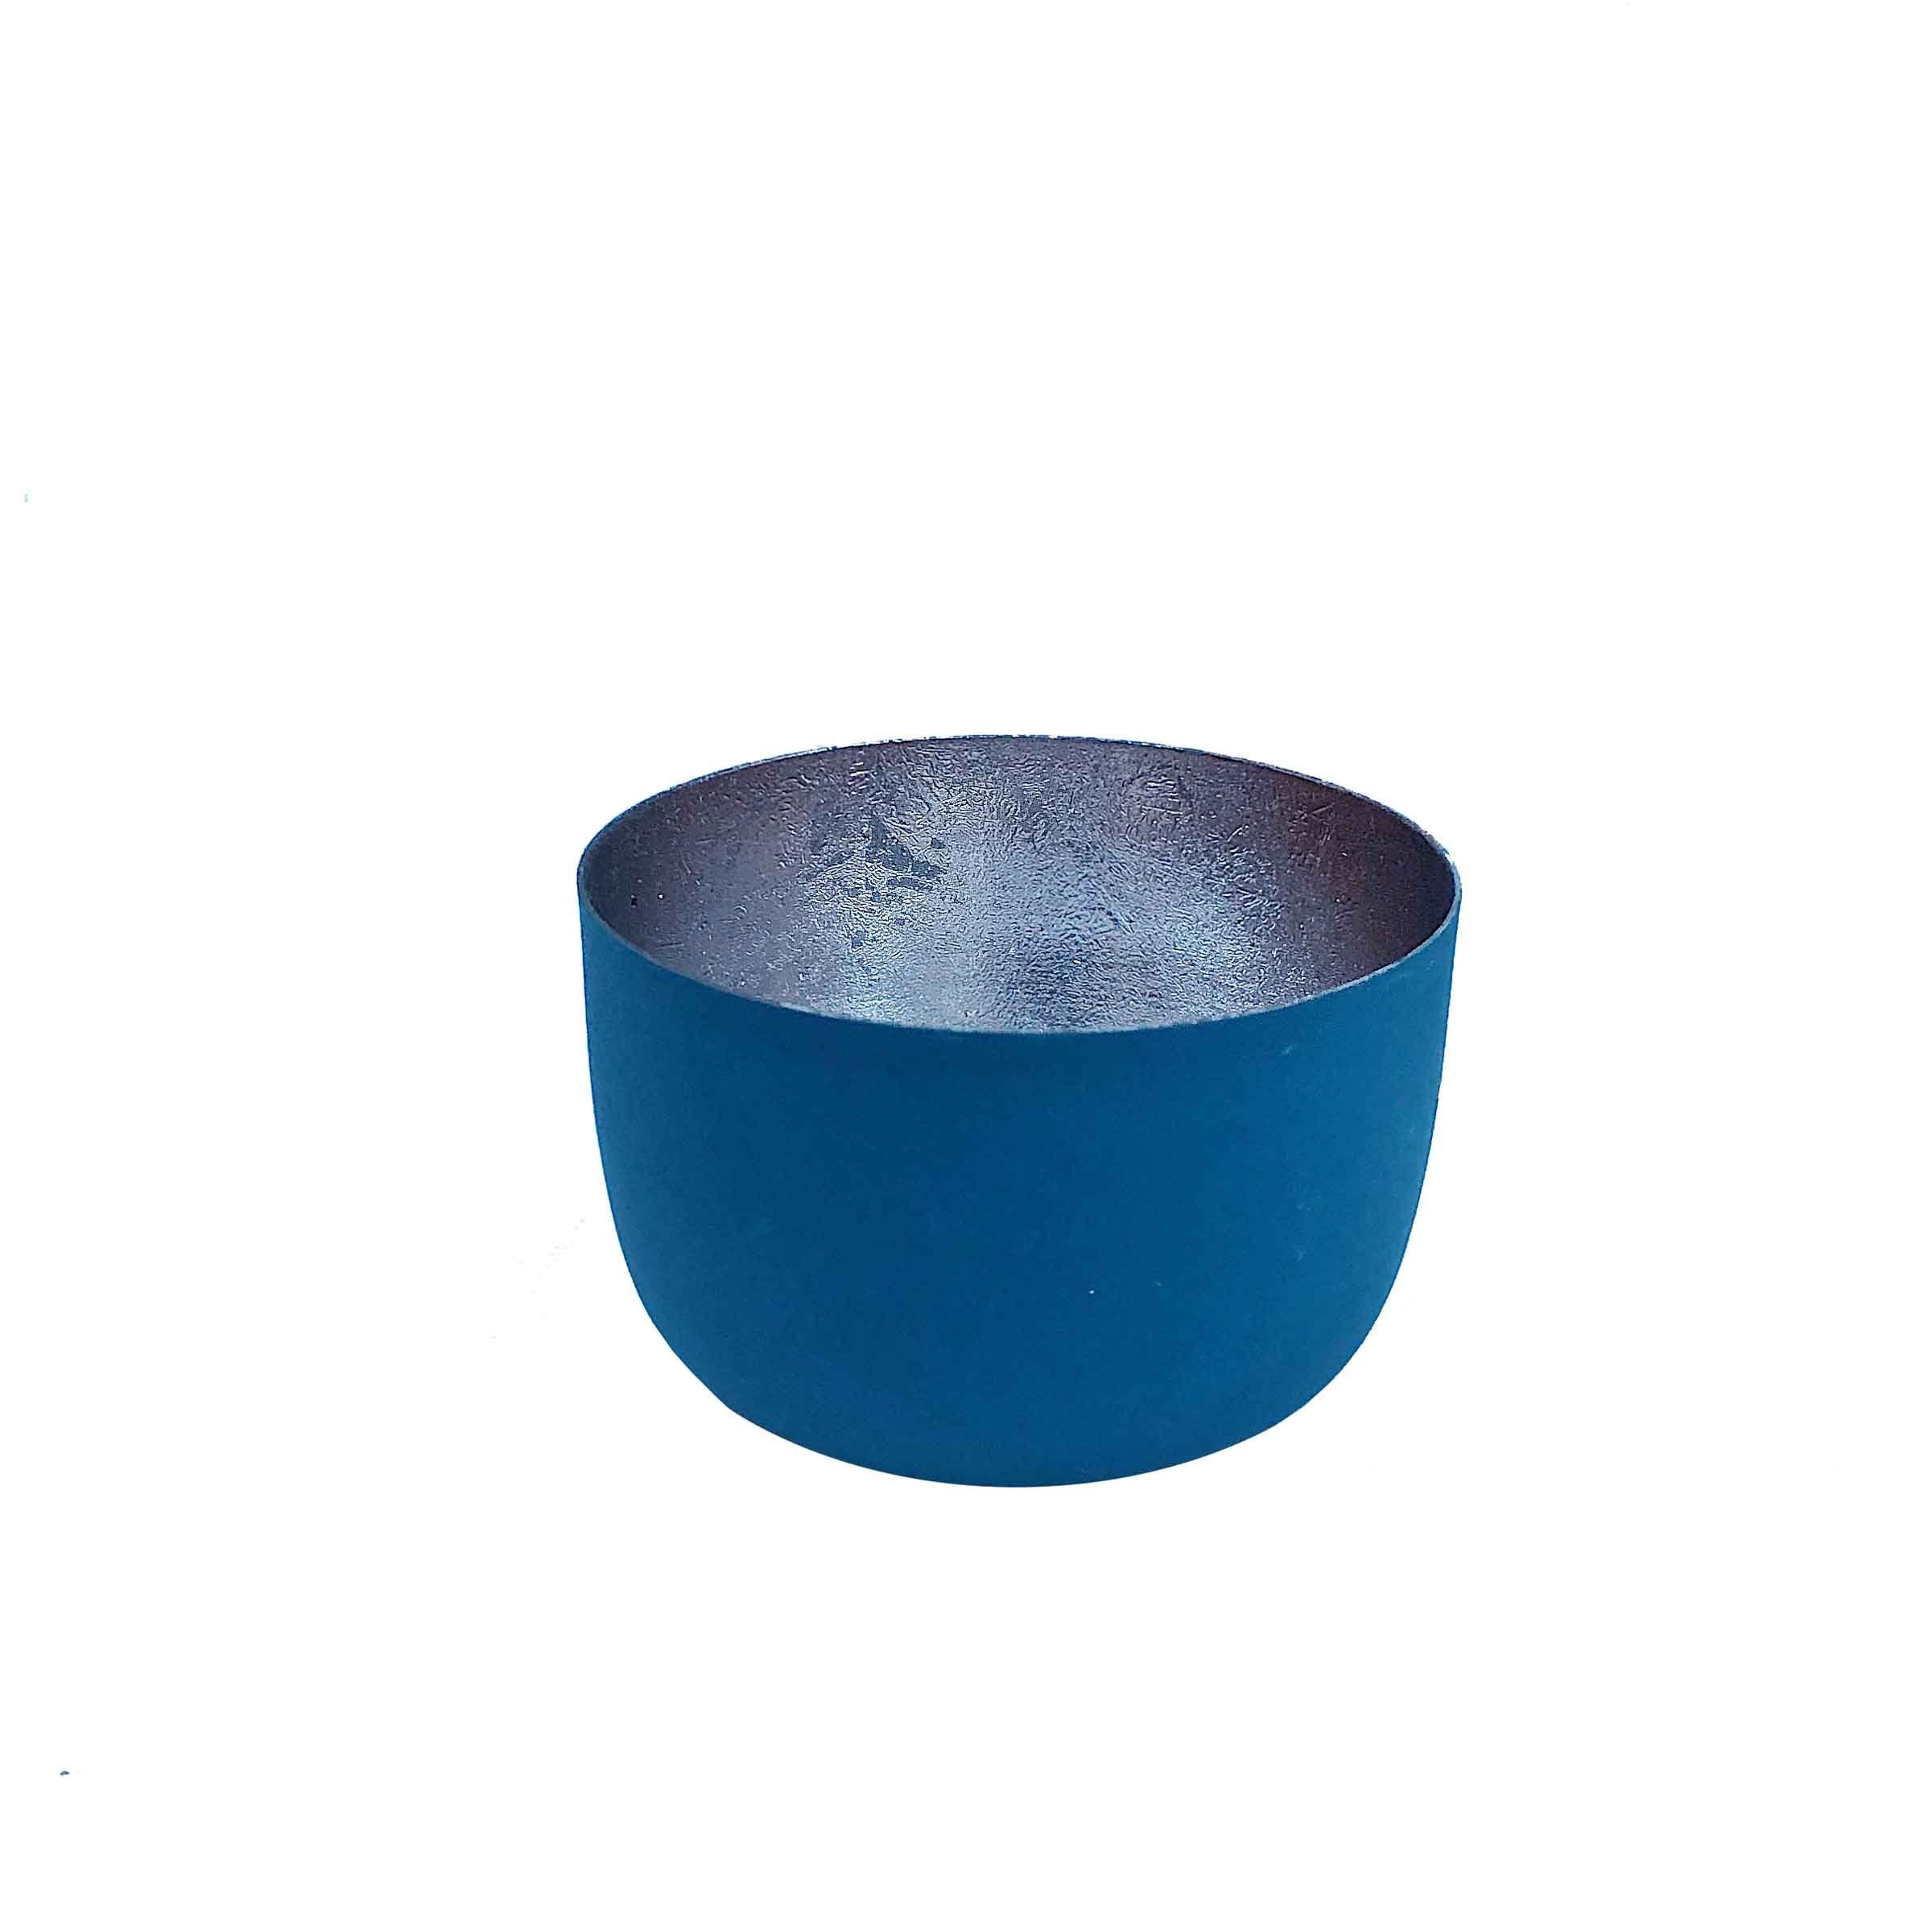 Giftcompany Madras blue/rosegold Teelichthalter, S windsor Teelichthalter